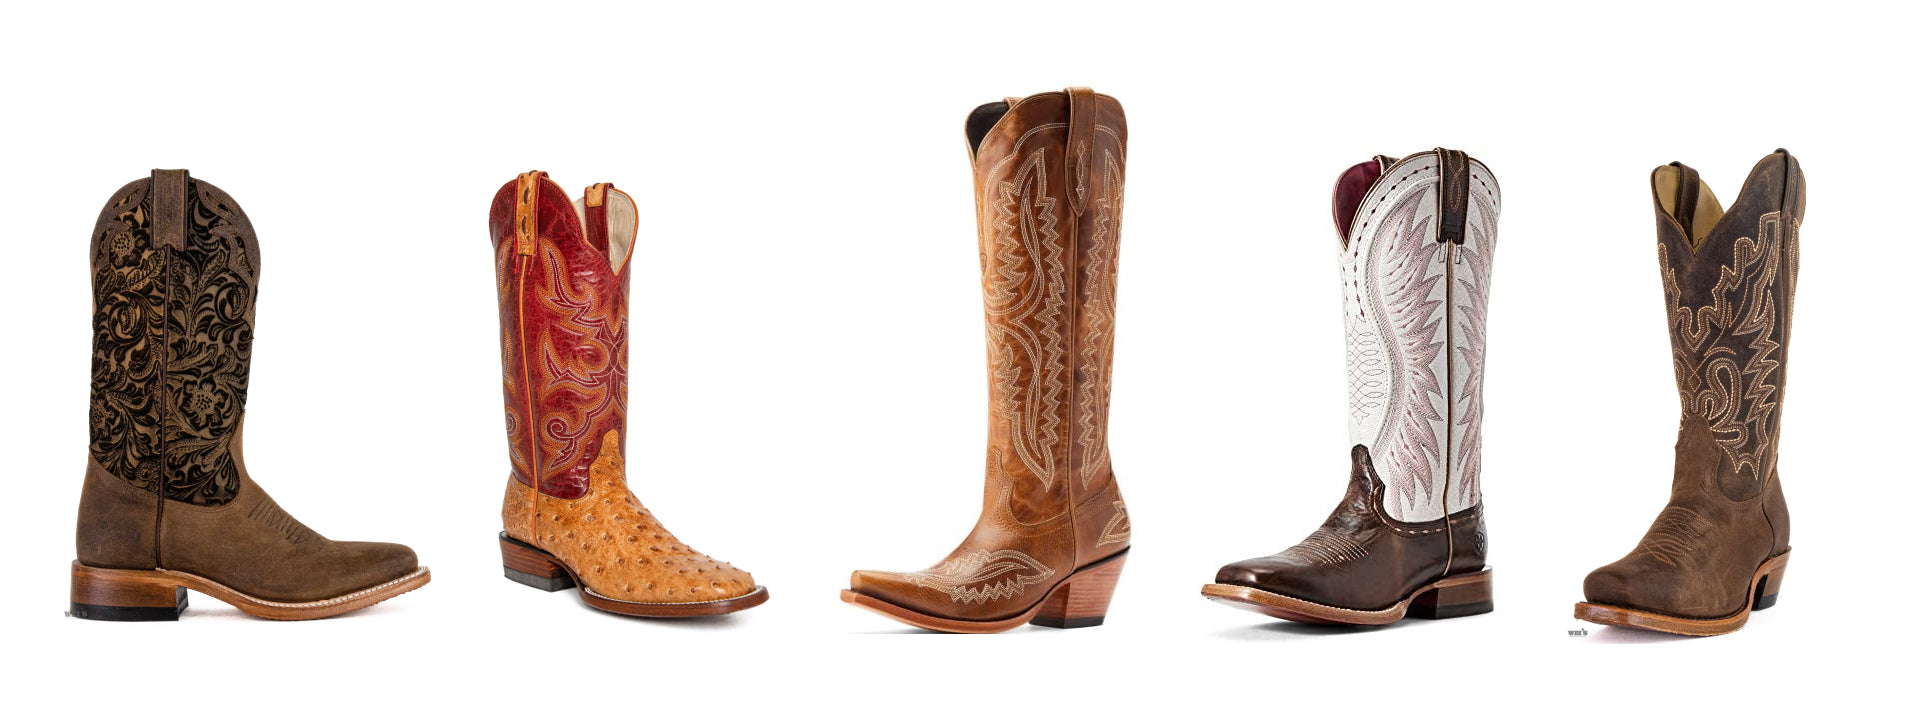 Wei's cowboy boots for women